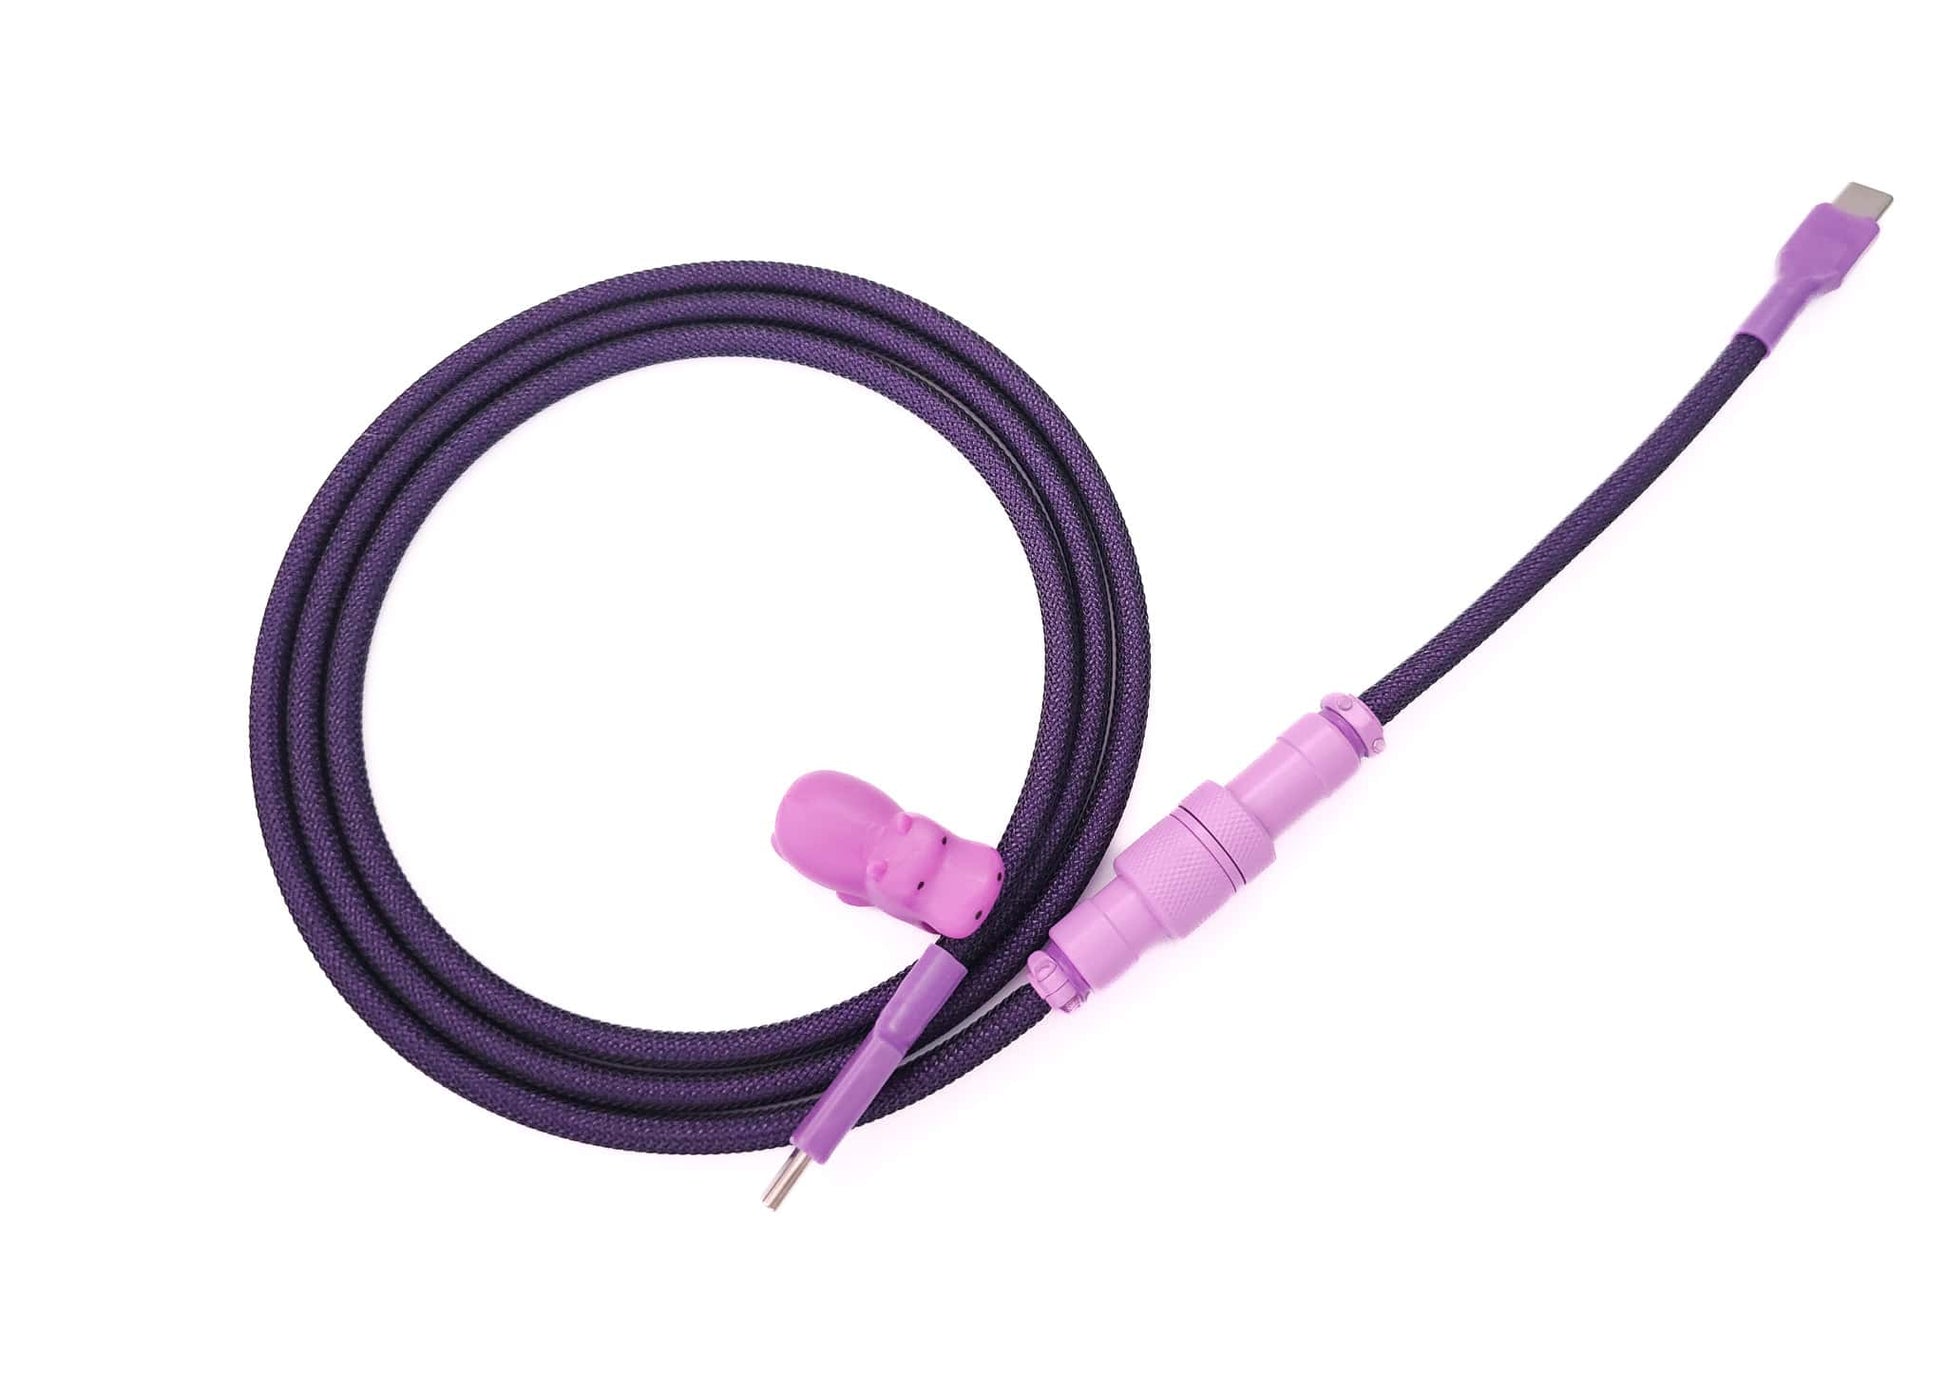 Dark purple cable with Purple Gx12